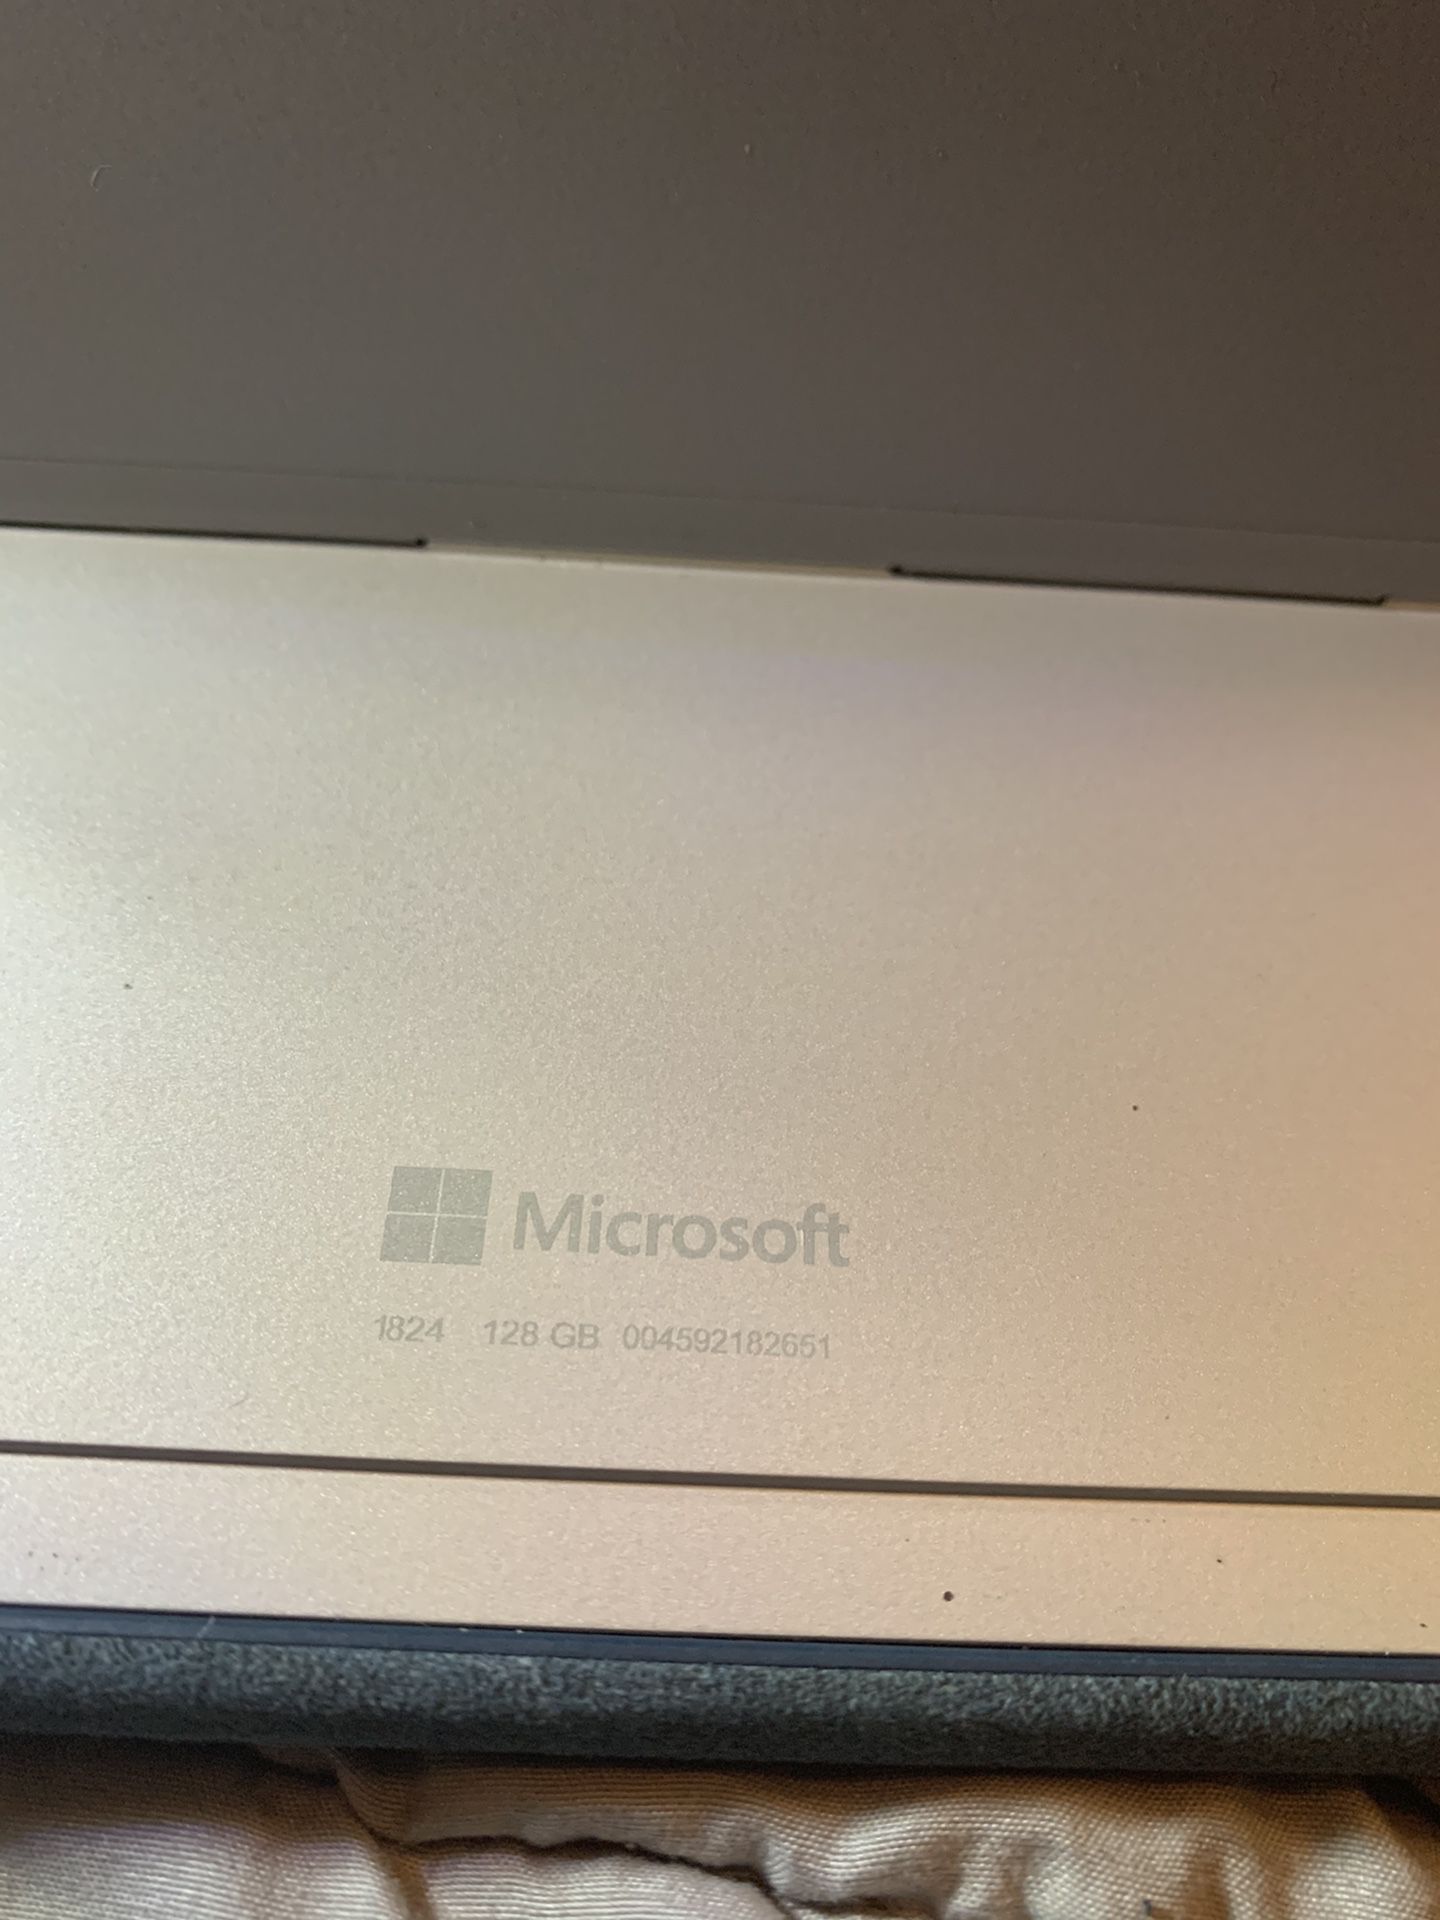 Microsoft Surface Go Model 1824 intel Pentium Gold 4415Y Processor 10" 1800 x 1200 IGZO LCD Display w/ Metal Mesh Touchscreen 4GB LPDDR3-1866 SDRAM,